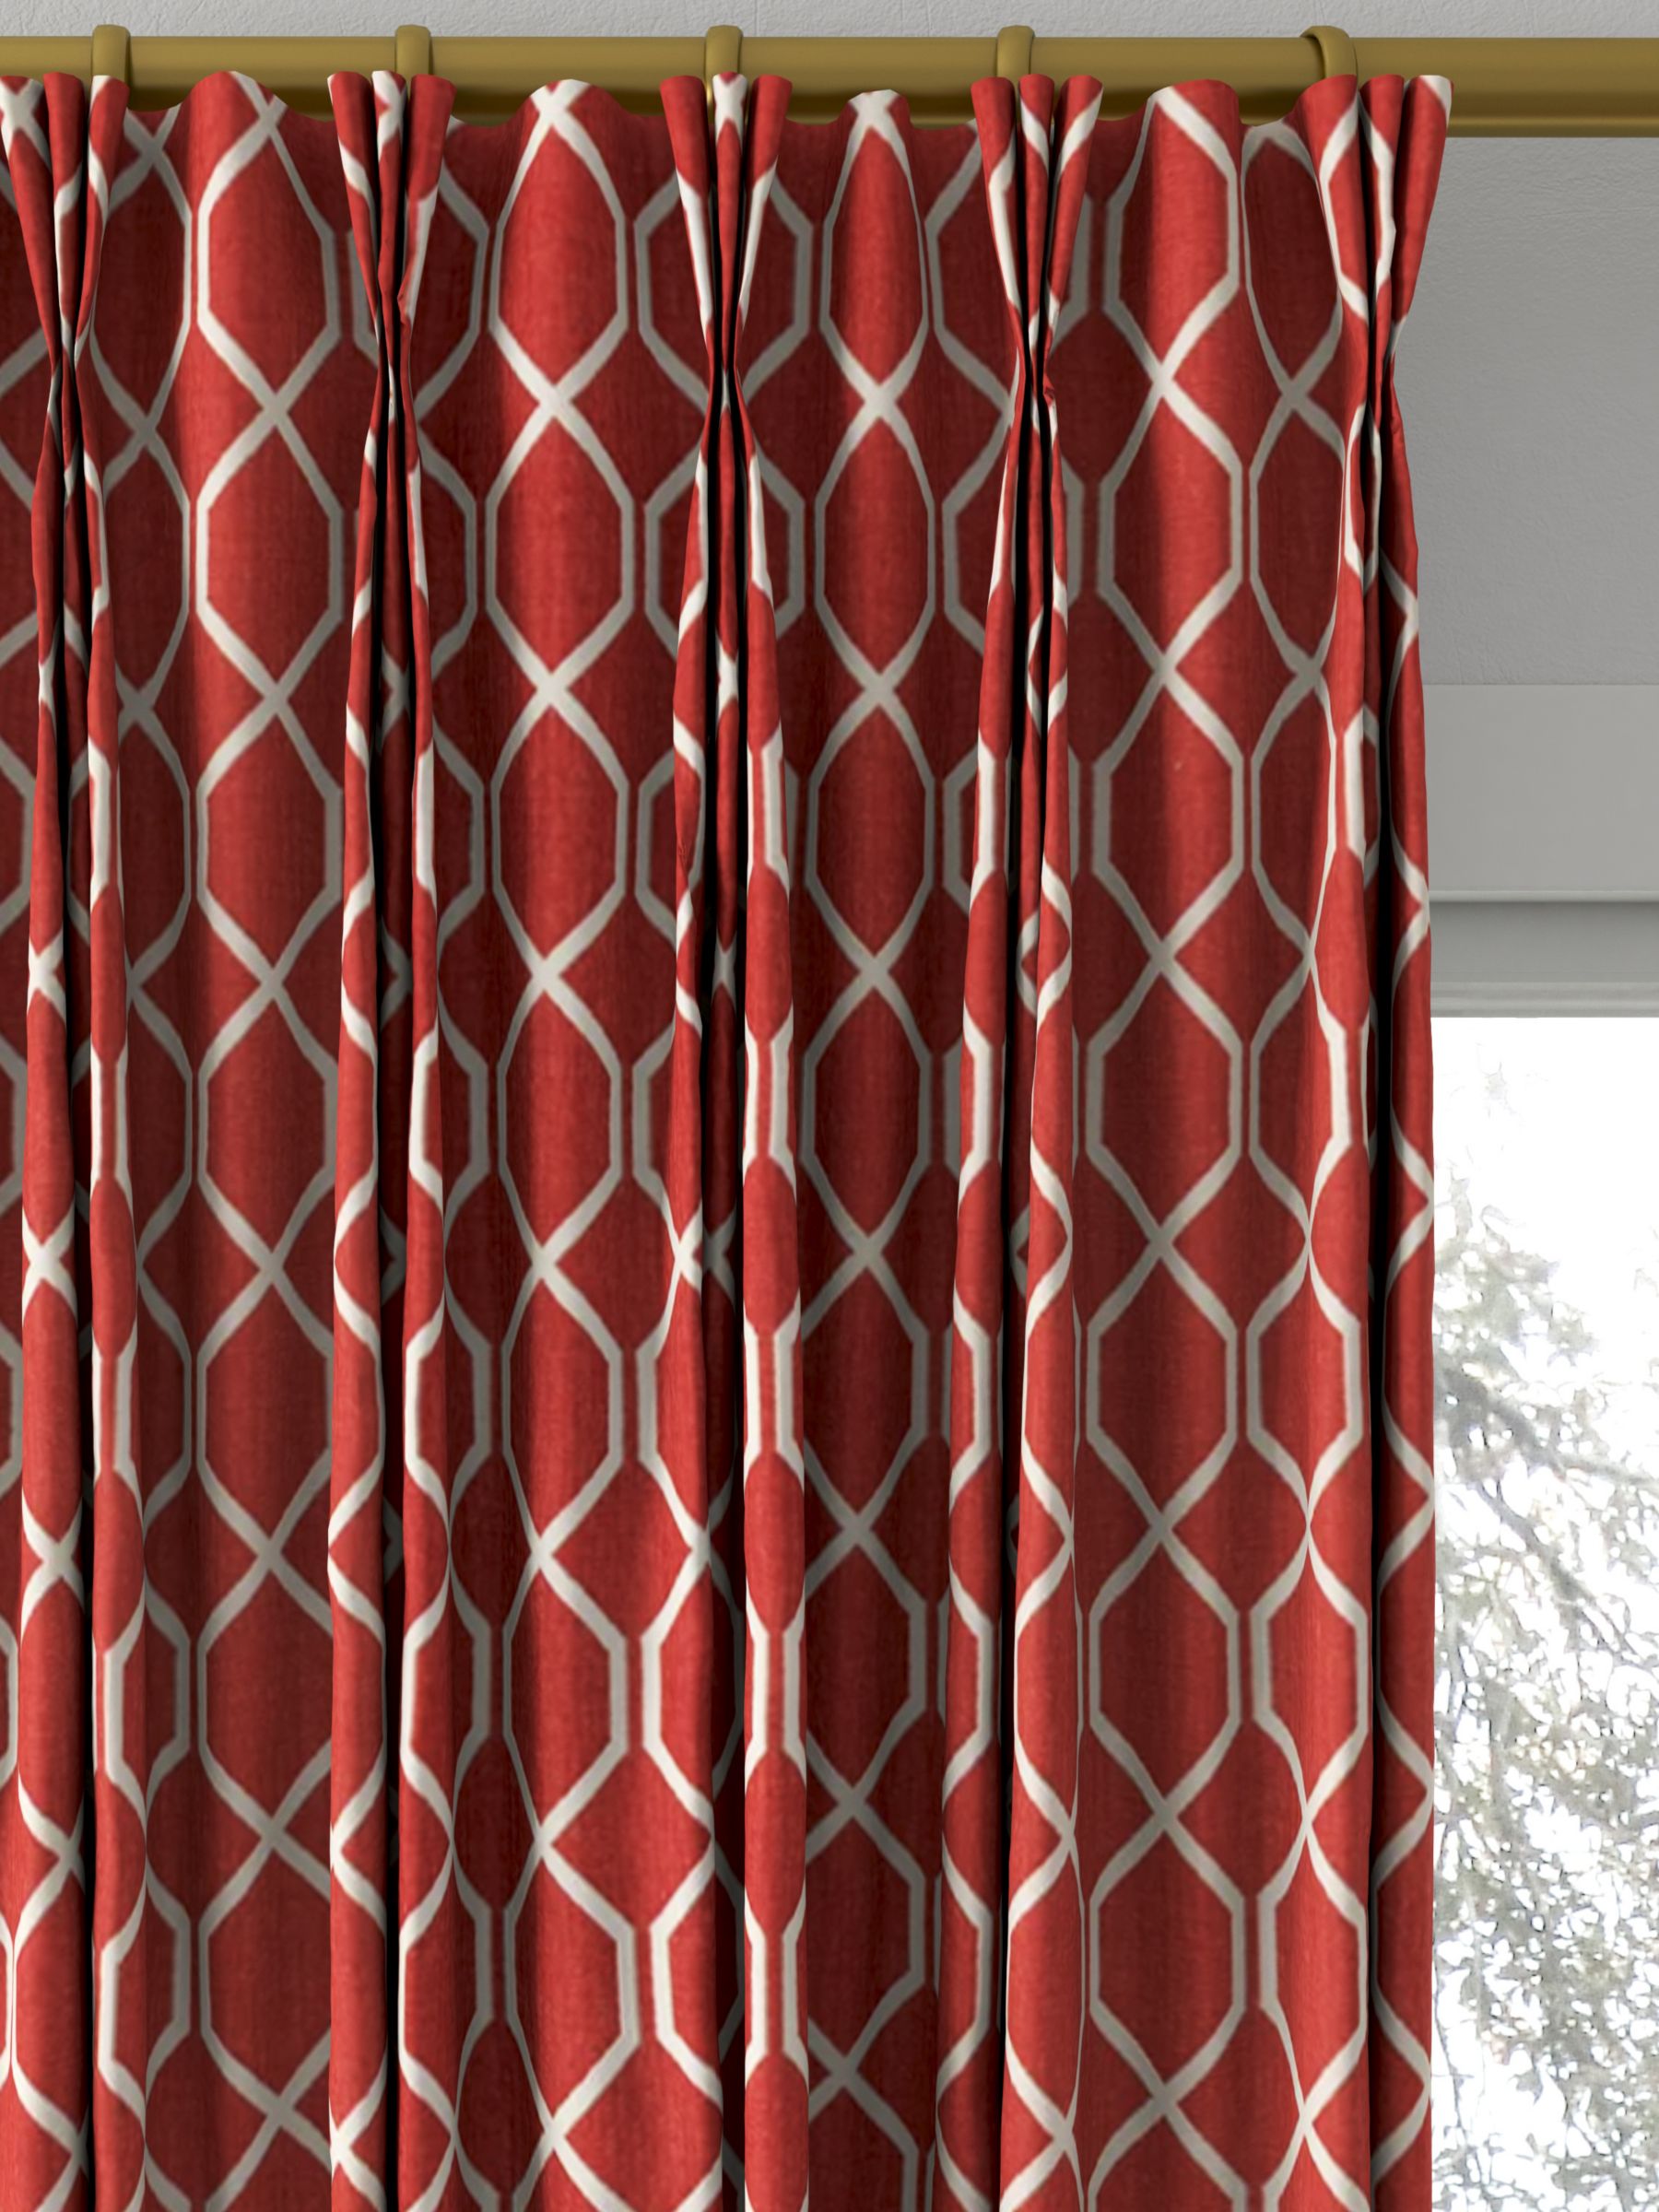 Sanderson Botanic Trellis Made to Measure Curtains, Bengal Red